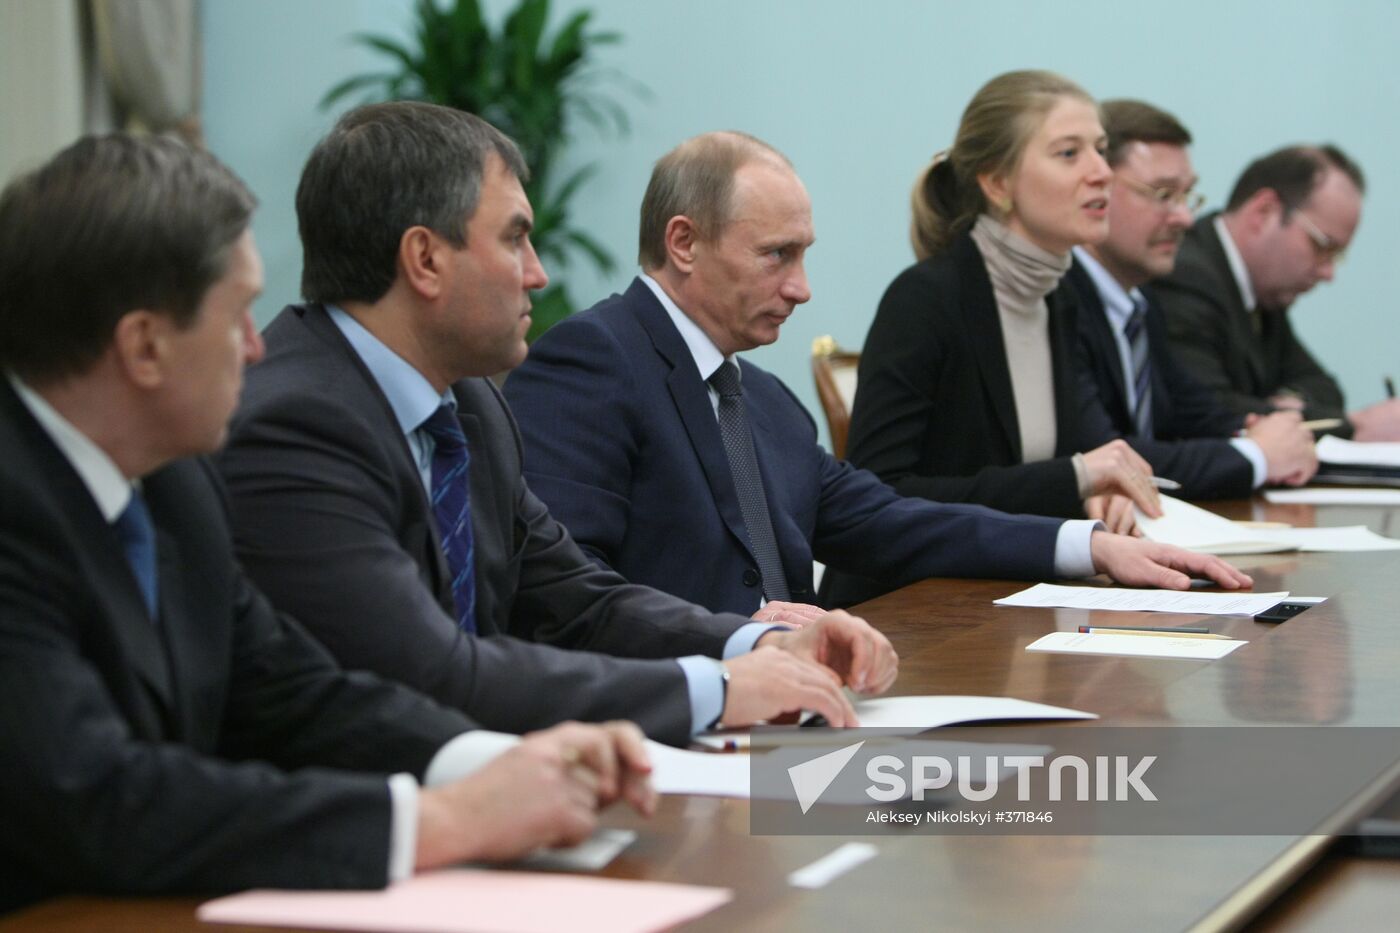 Vladimir Putin meets with Wilfried Martens